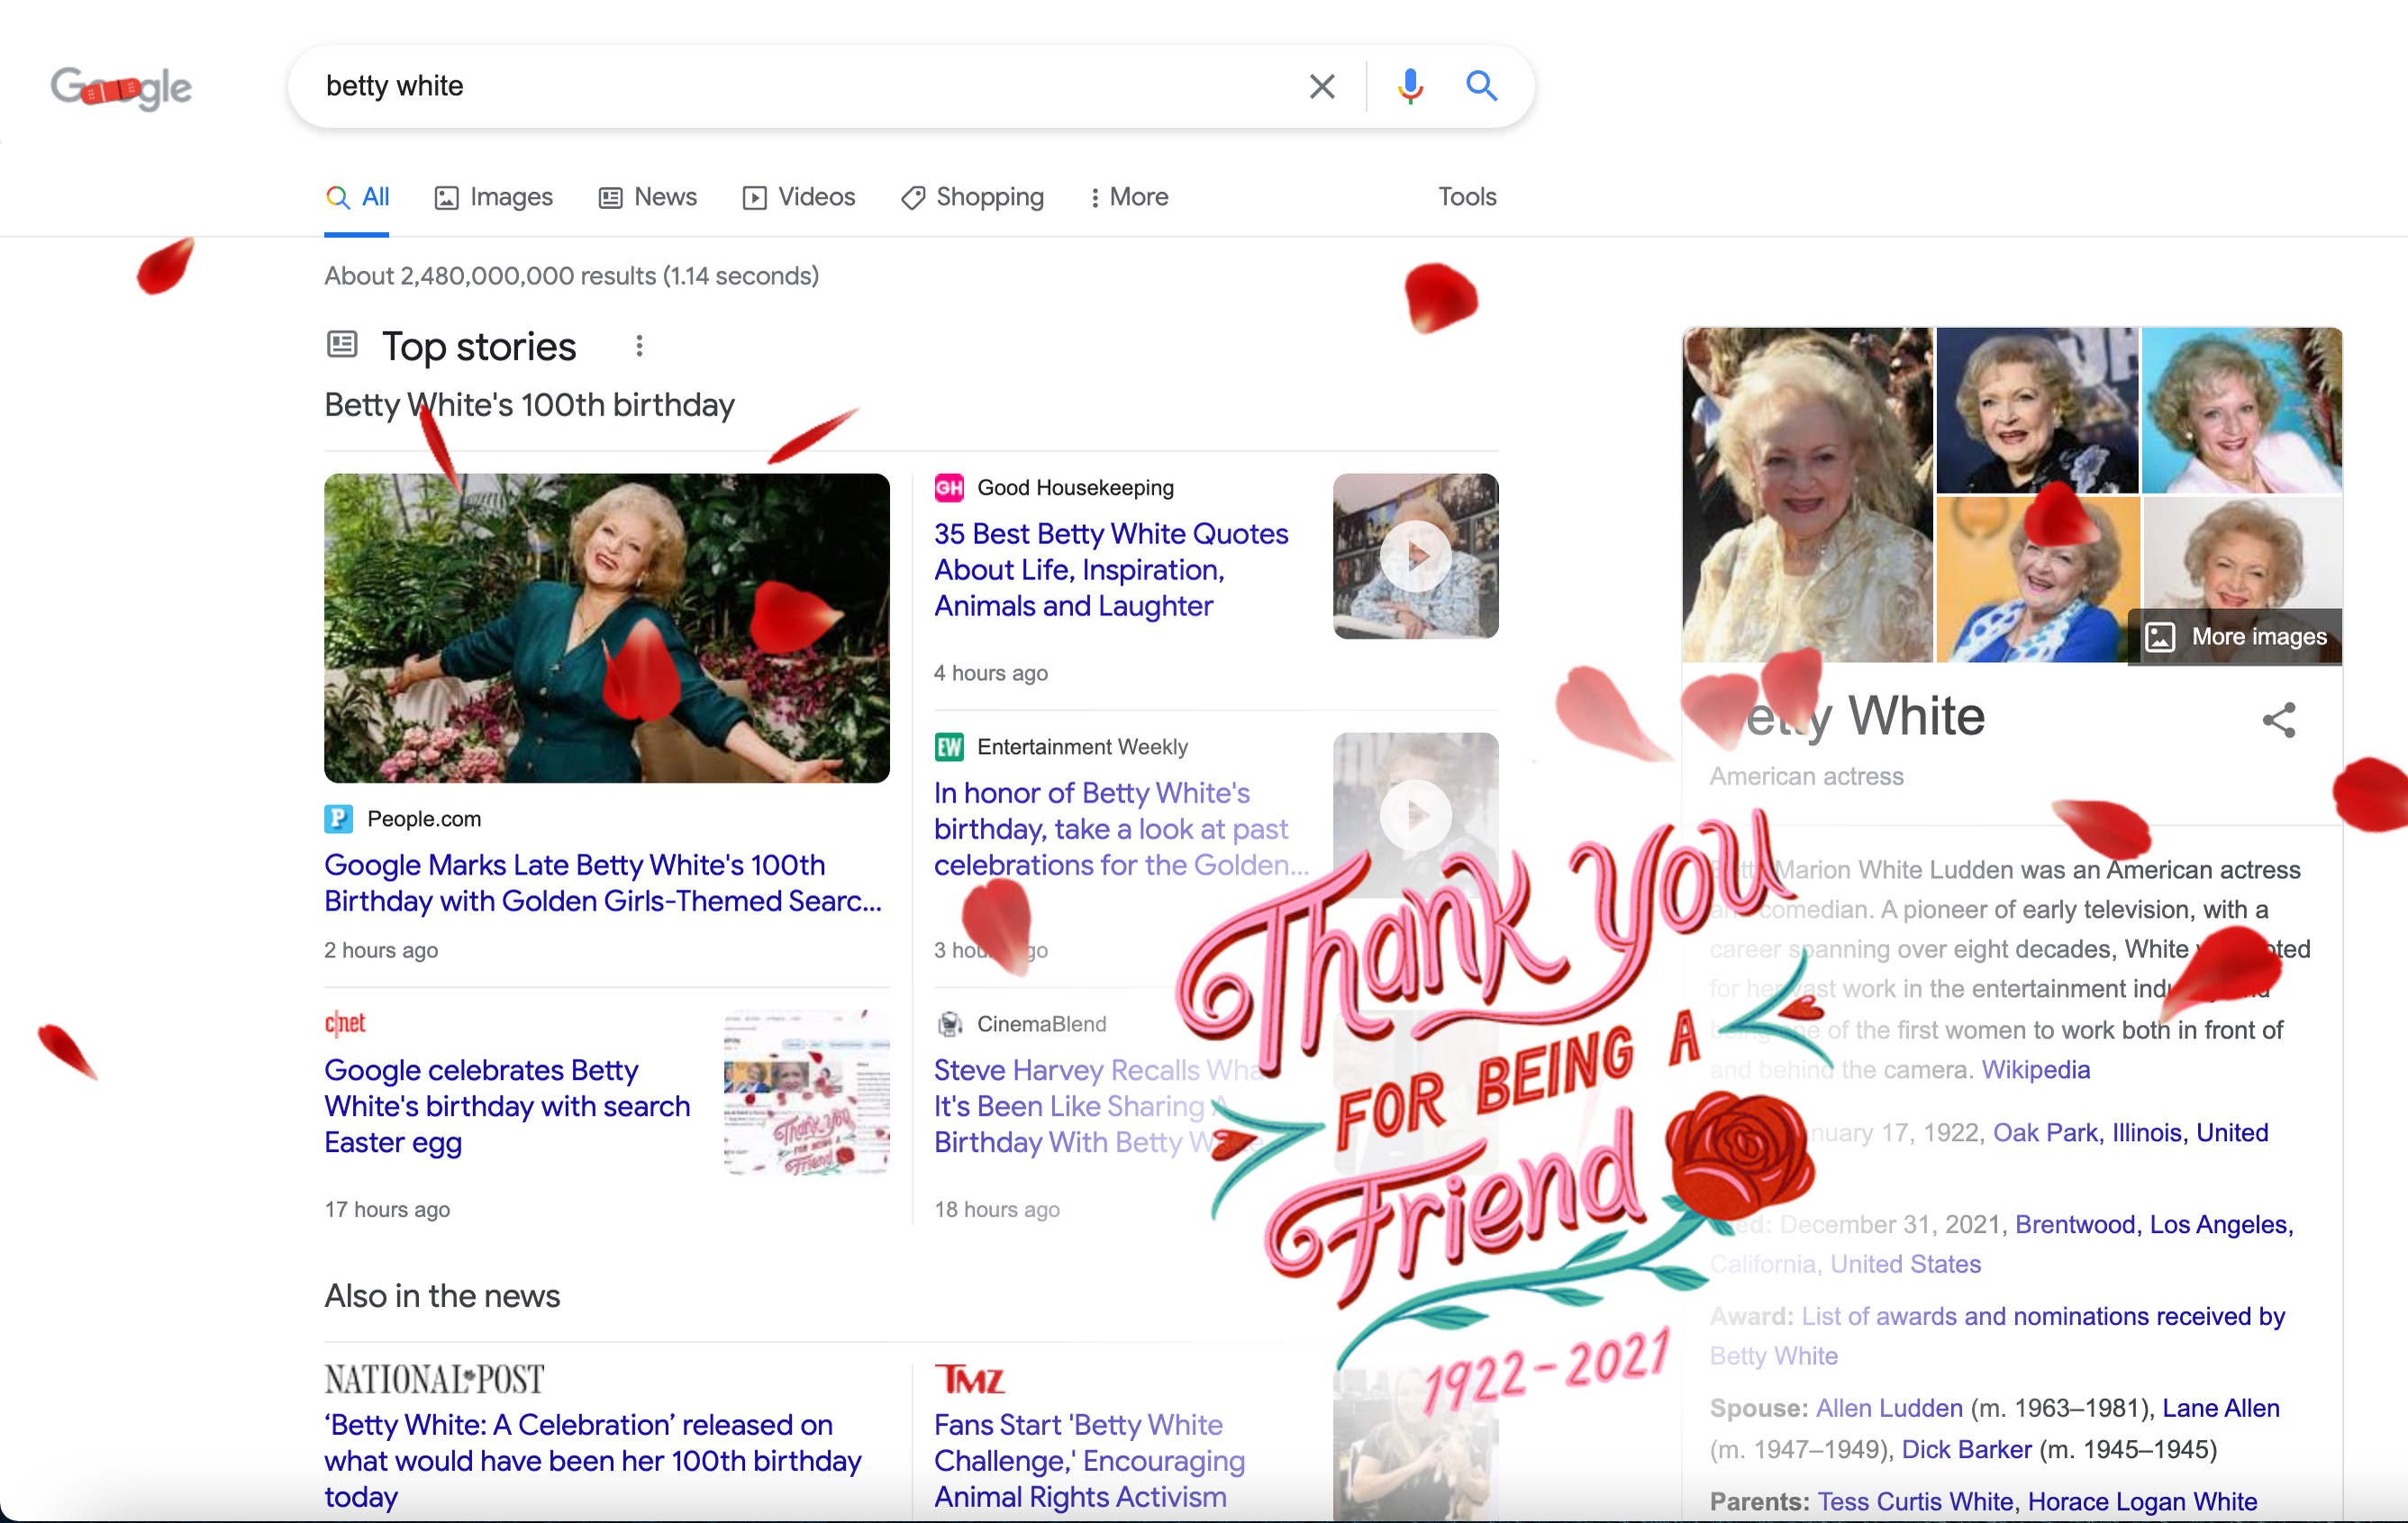 betty-white-google-100th-birthday.png